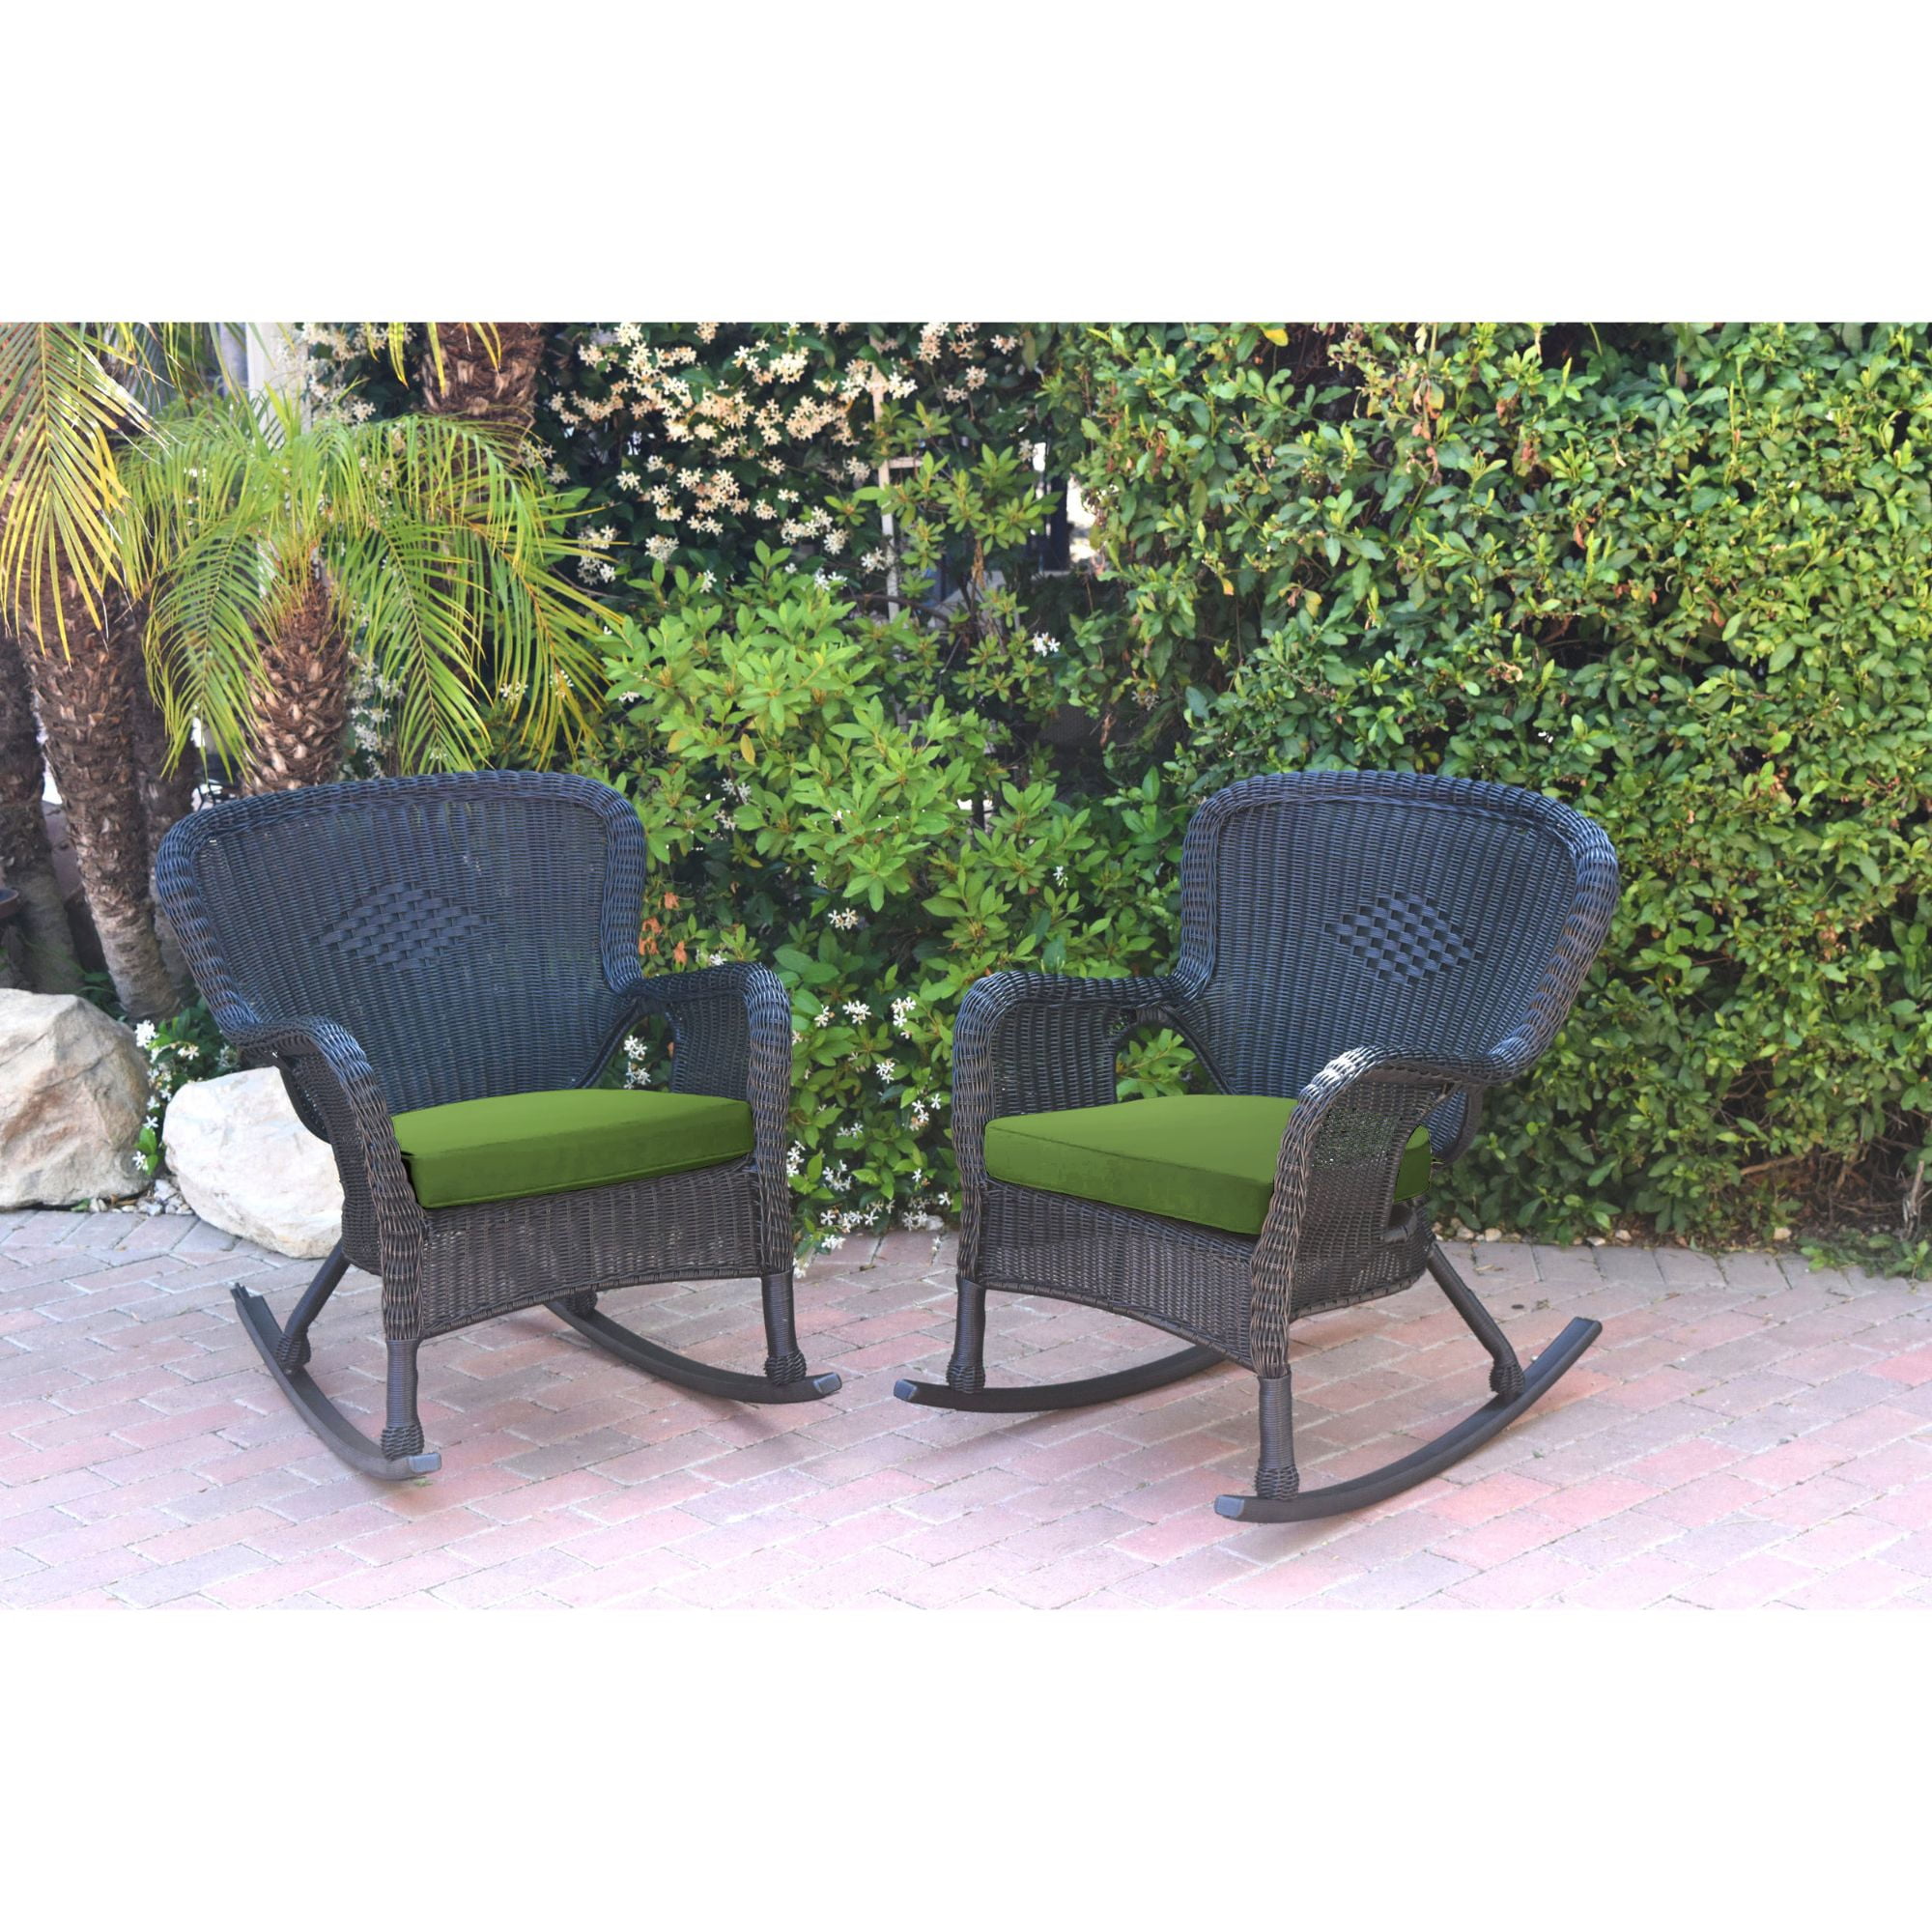 Set of 2 Black Outdoor Patio Resin Wicker Rocker Chairs - Hunter Green